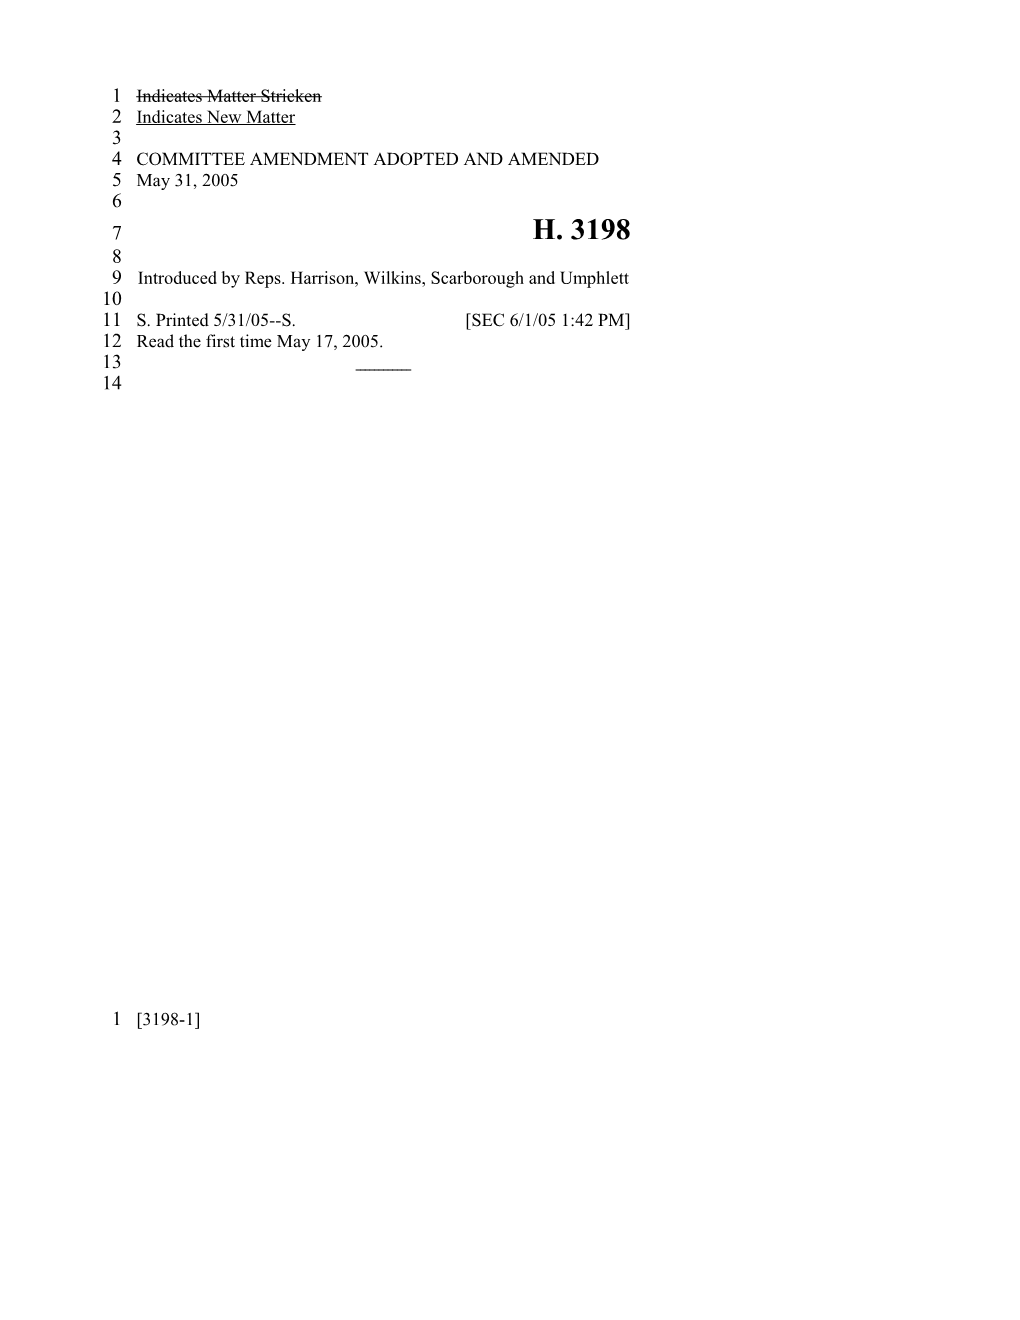 2005-2006 Bill 3198: Municipal Finance Oversight Act of 2005 - South Carolina Legislature Online